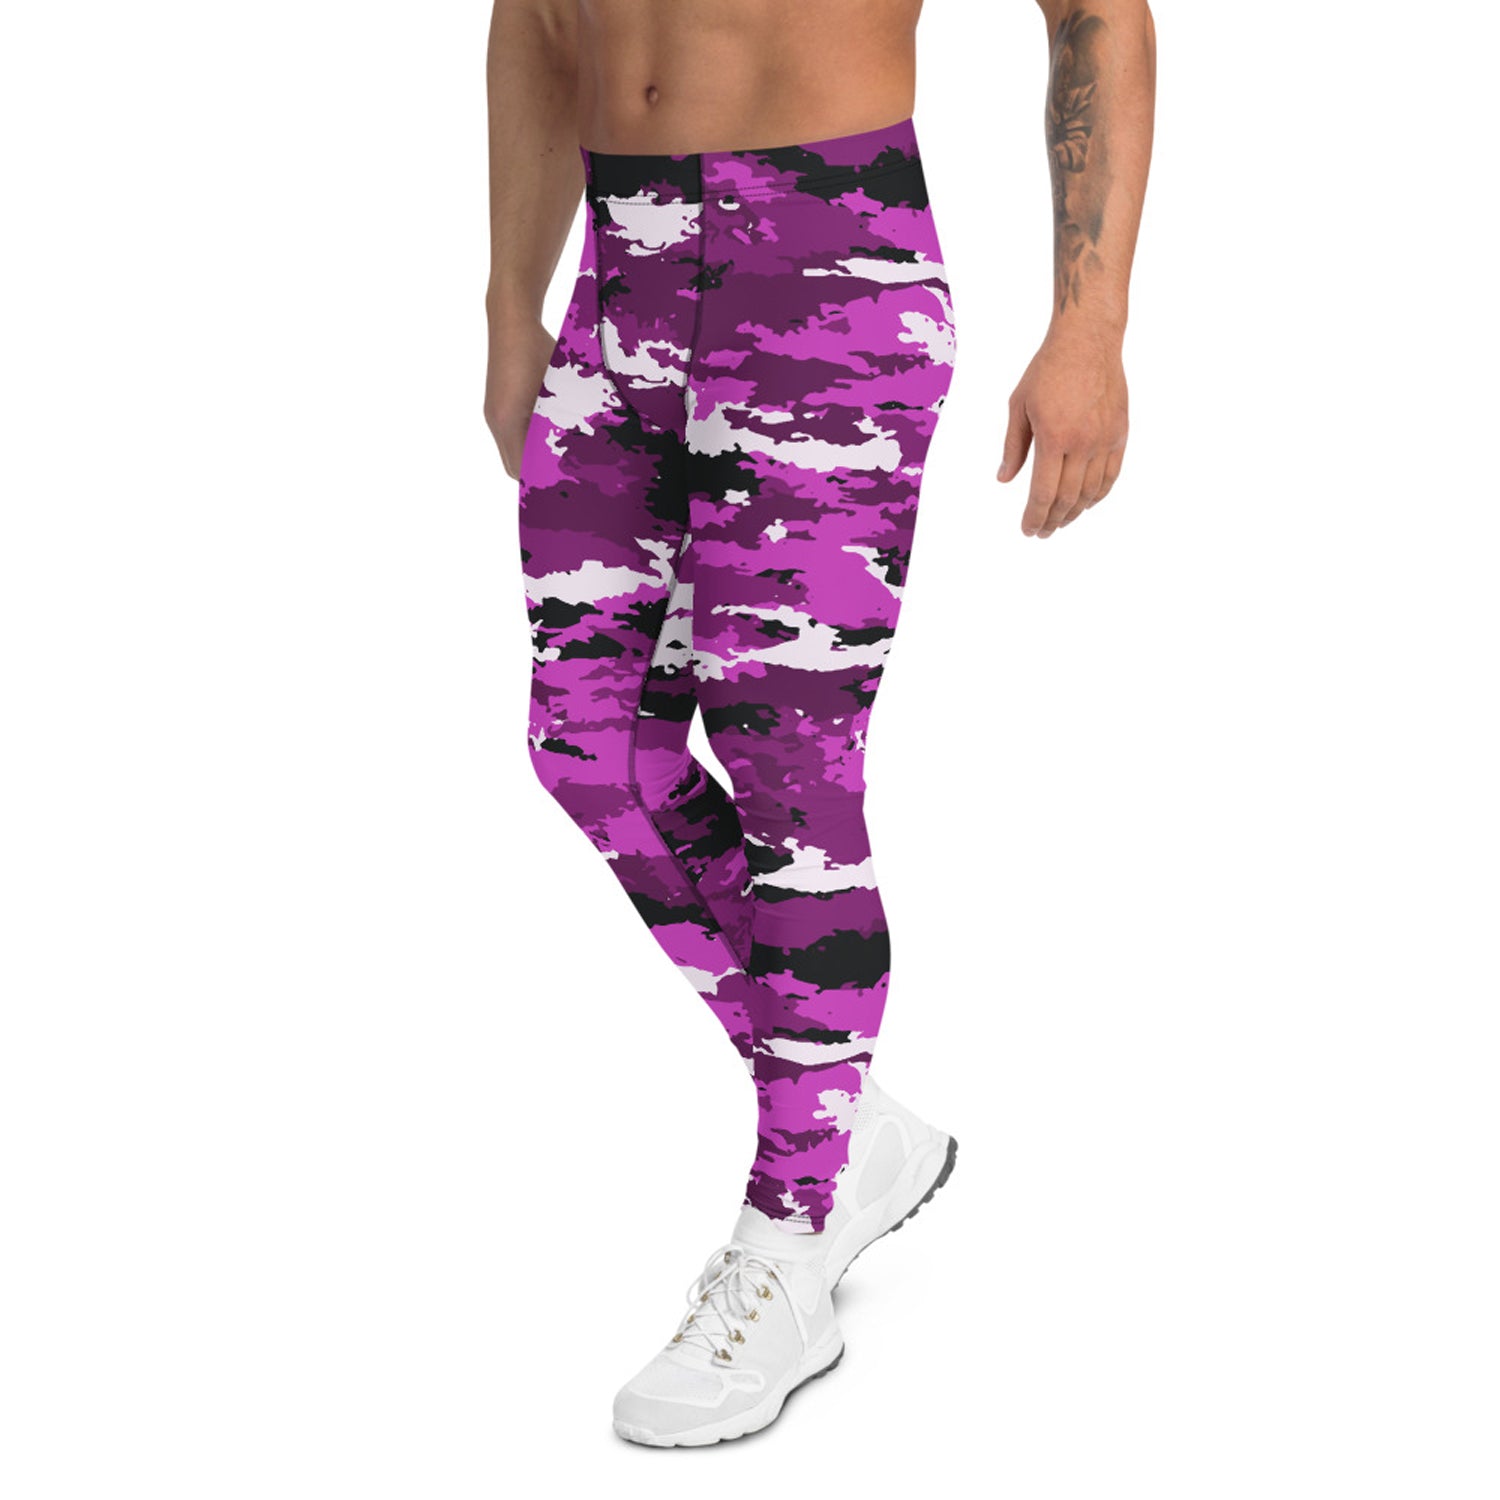 Men's purple camo leggings